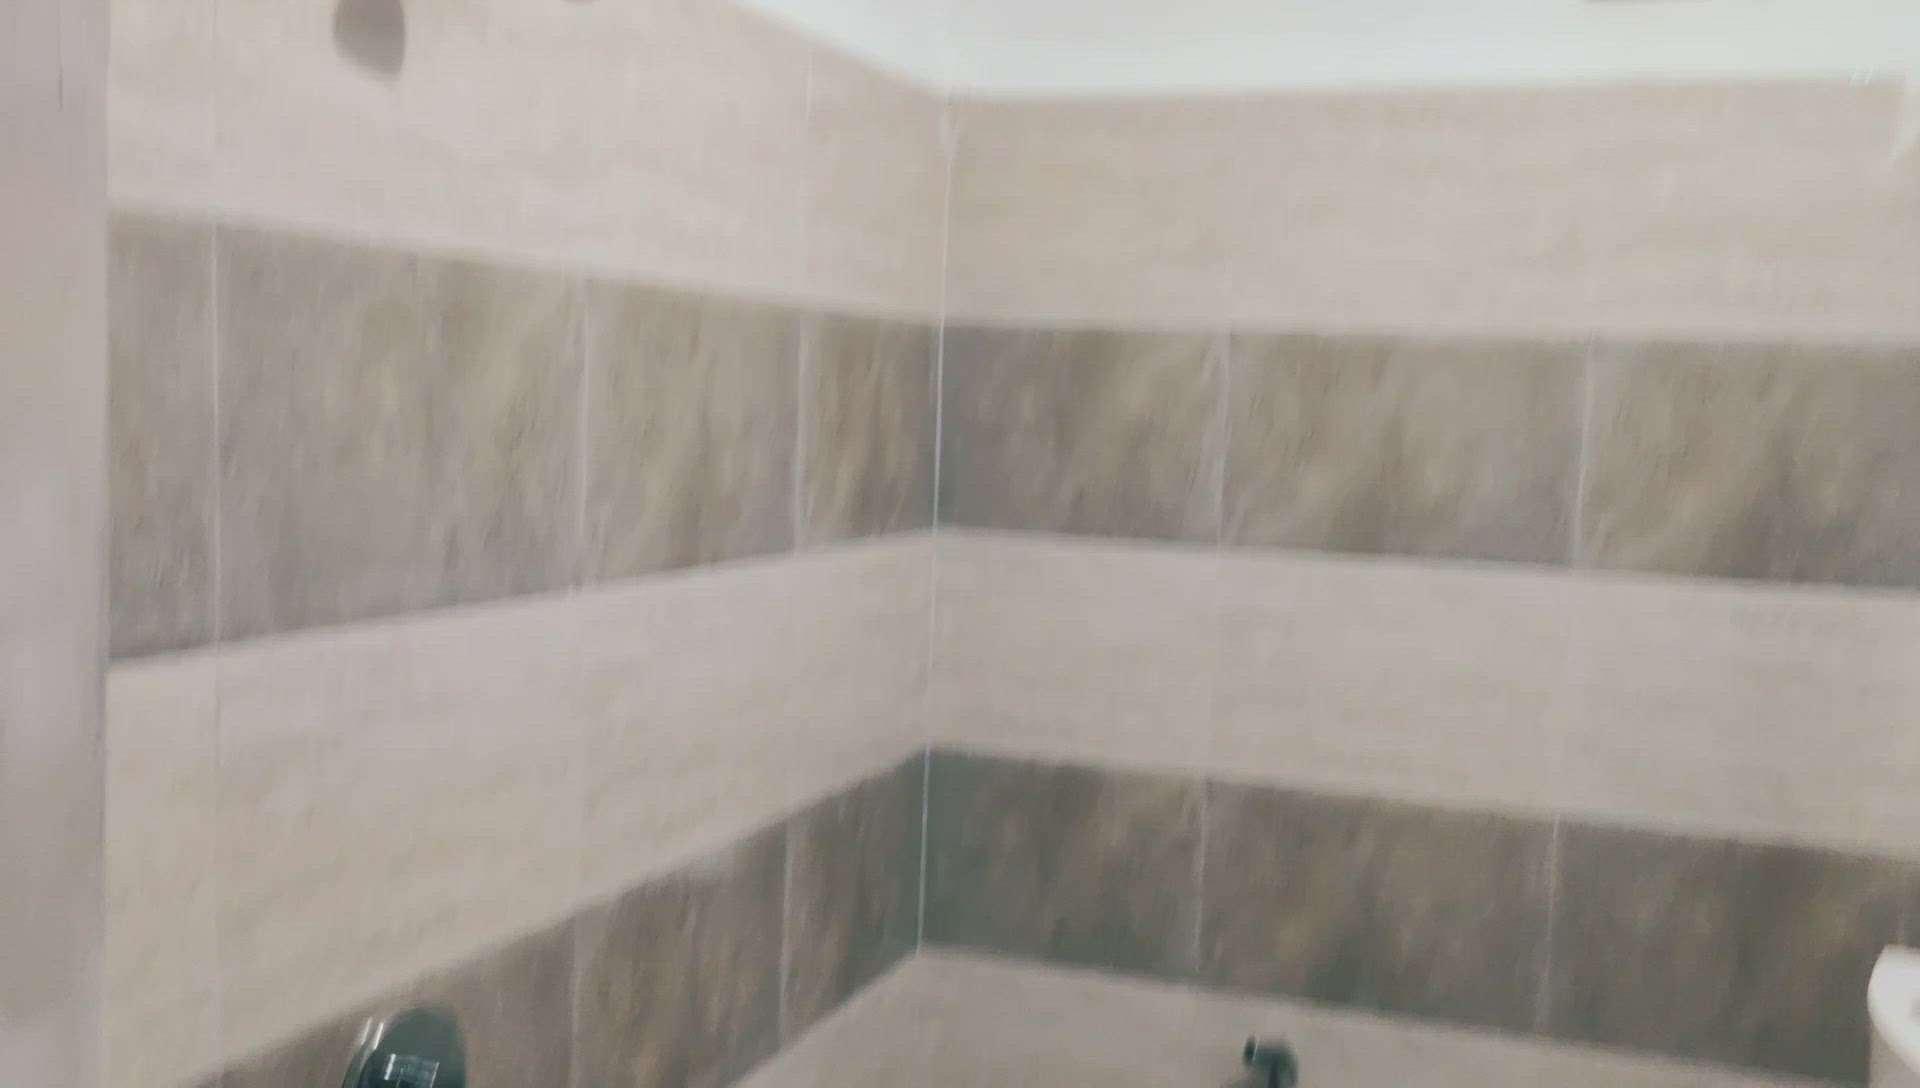 #12*18 tiles #BathroomTIles #BathroomRenovation #Plumber #Architect #CivilContractor #withmaterialconstruction